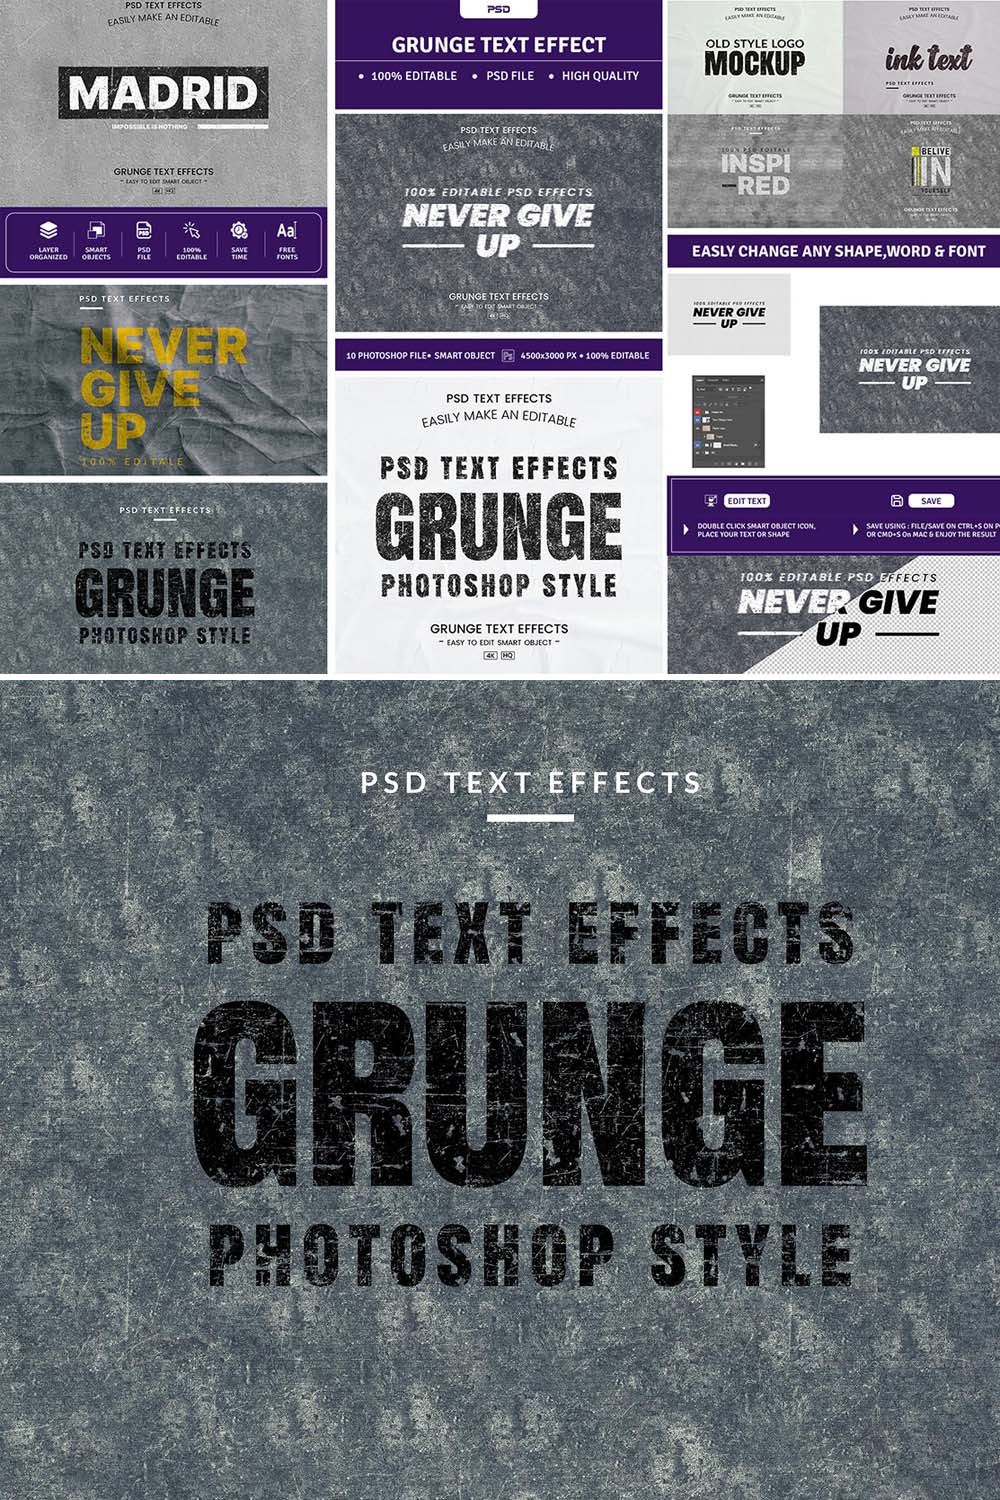 Grunge Text Effect Design pinterest preview image.